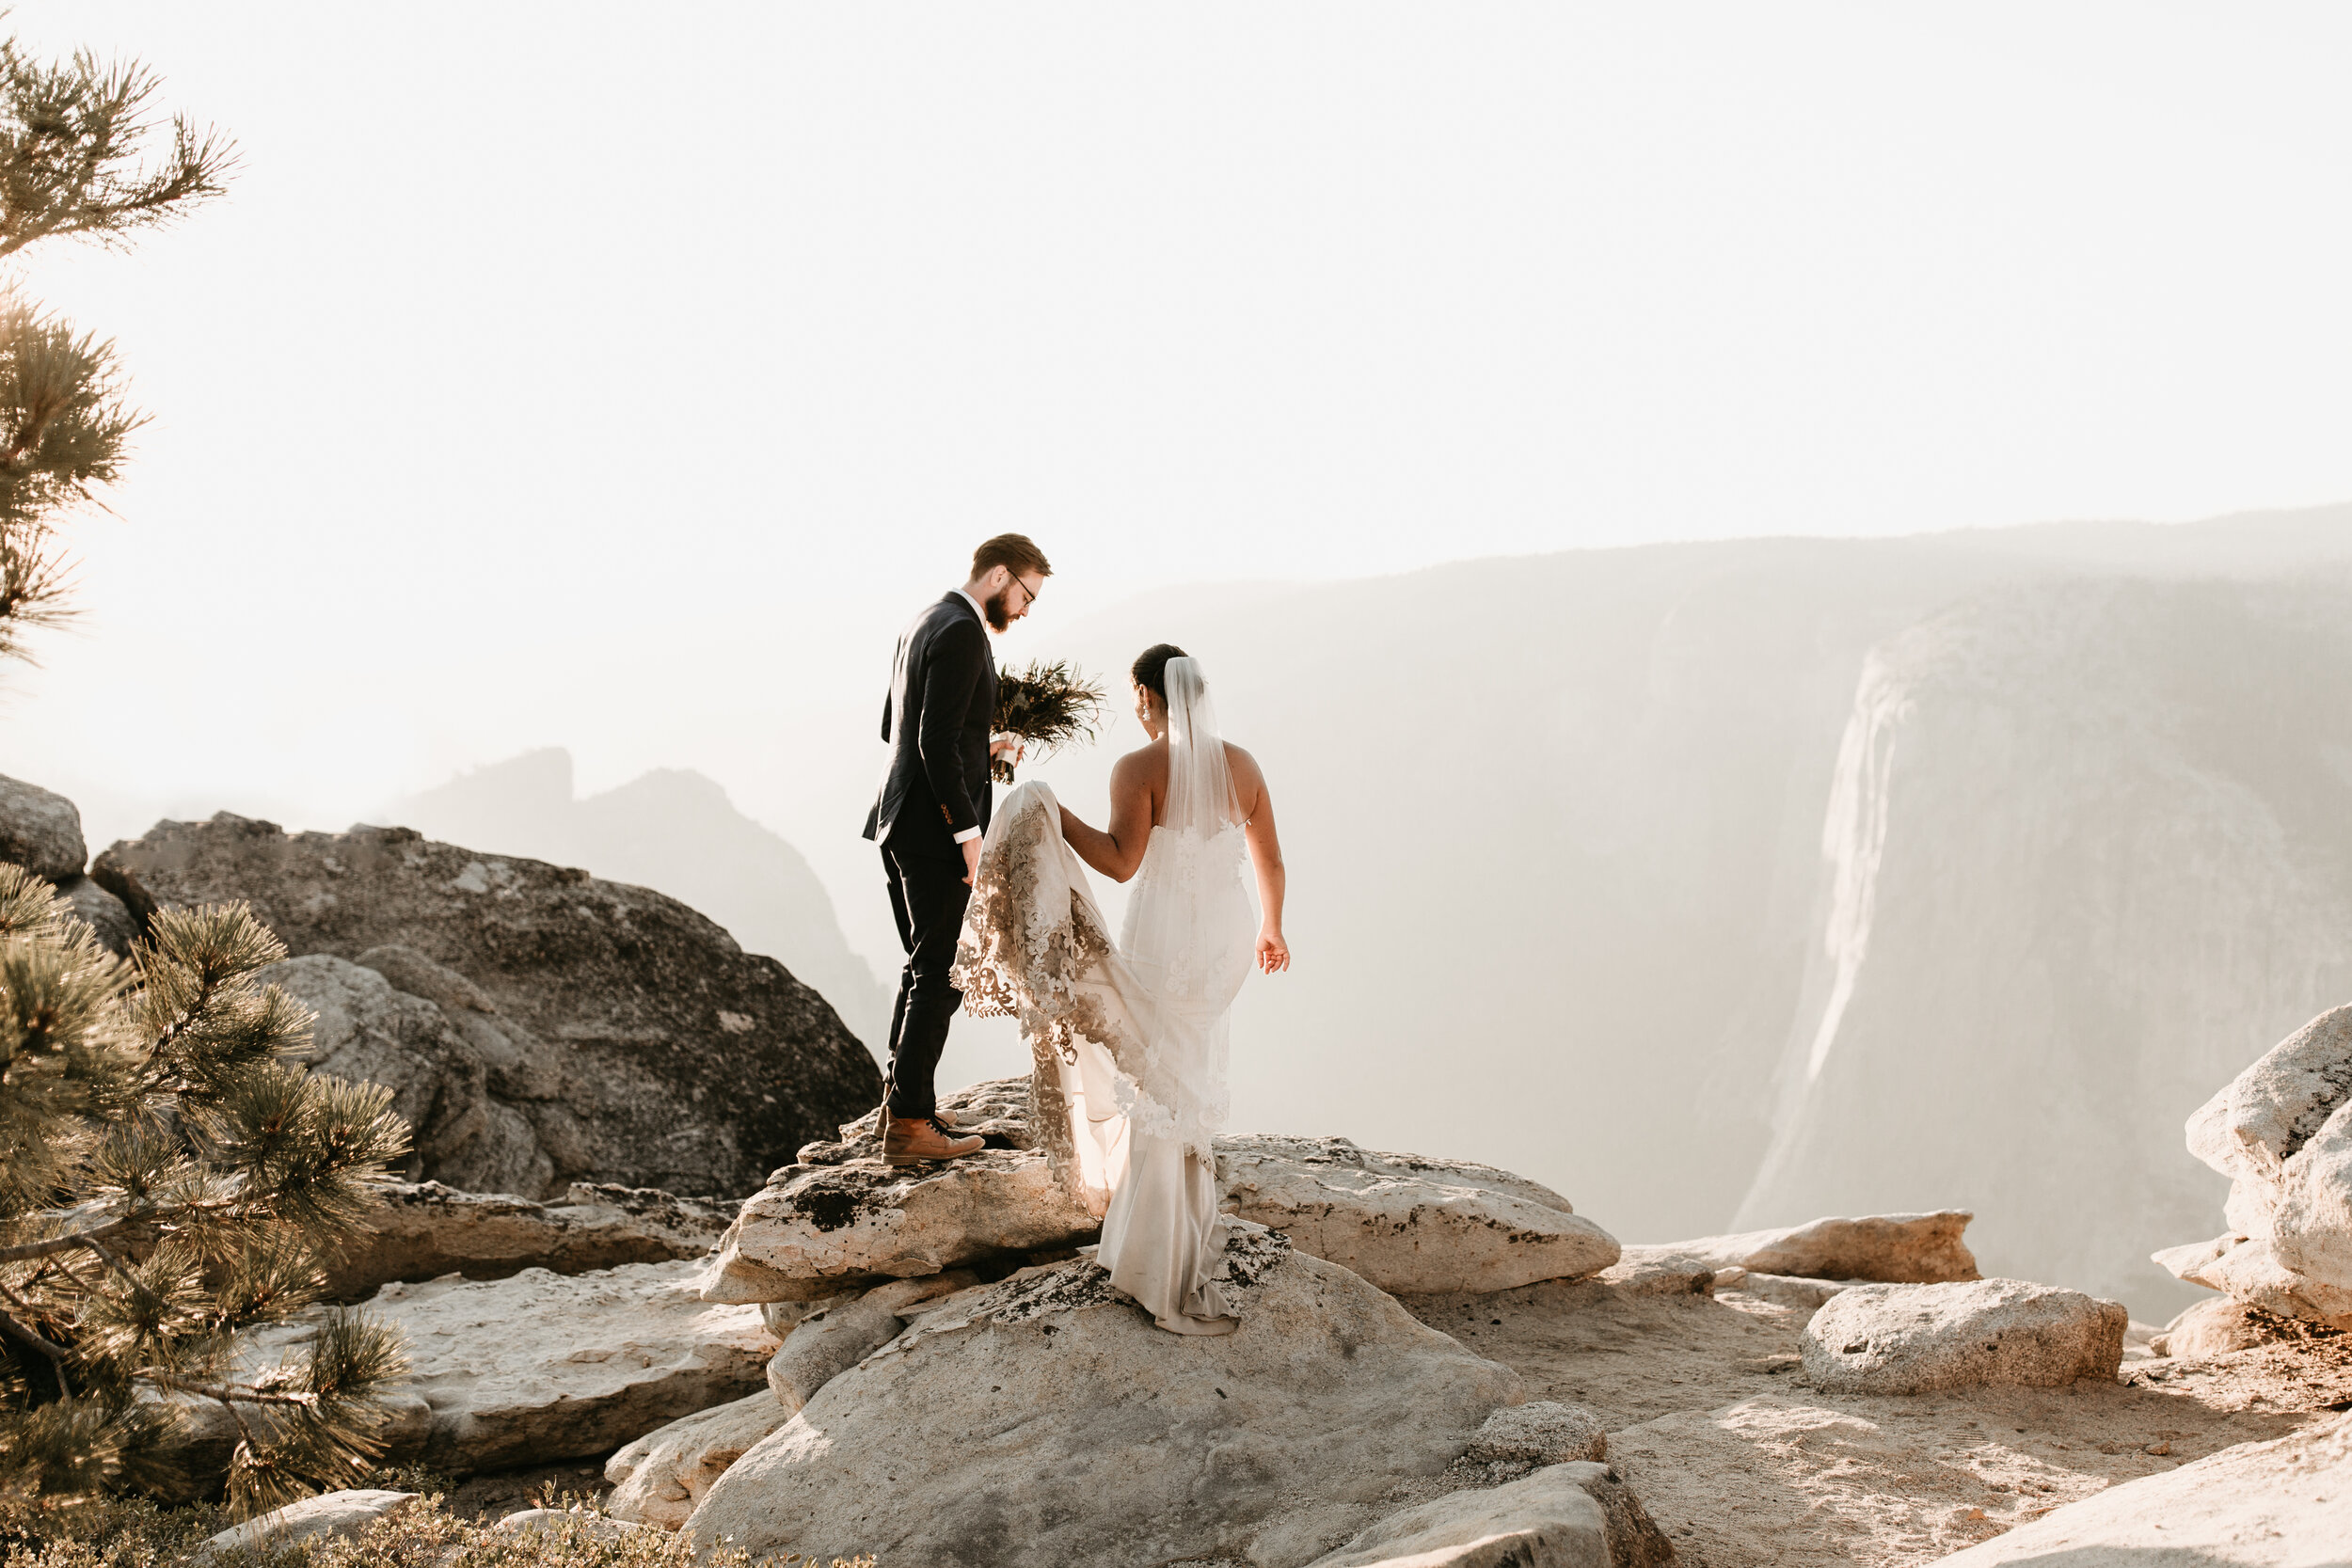 Nicole-Daacke-Photography-yosemite-national-park-elopement-photography-adventure-elopement-in-yosemite-taft-point-sunset-elopement-photographs-california-intimate-destination-wedding-in-yosemite-national-park--2.jpg